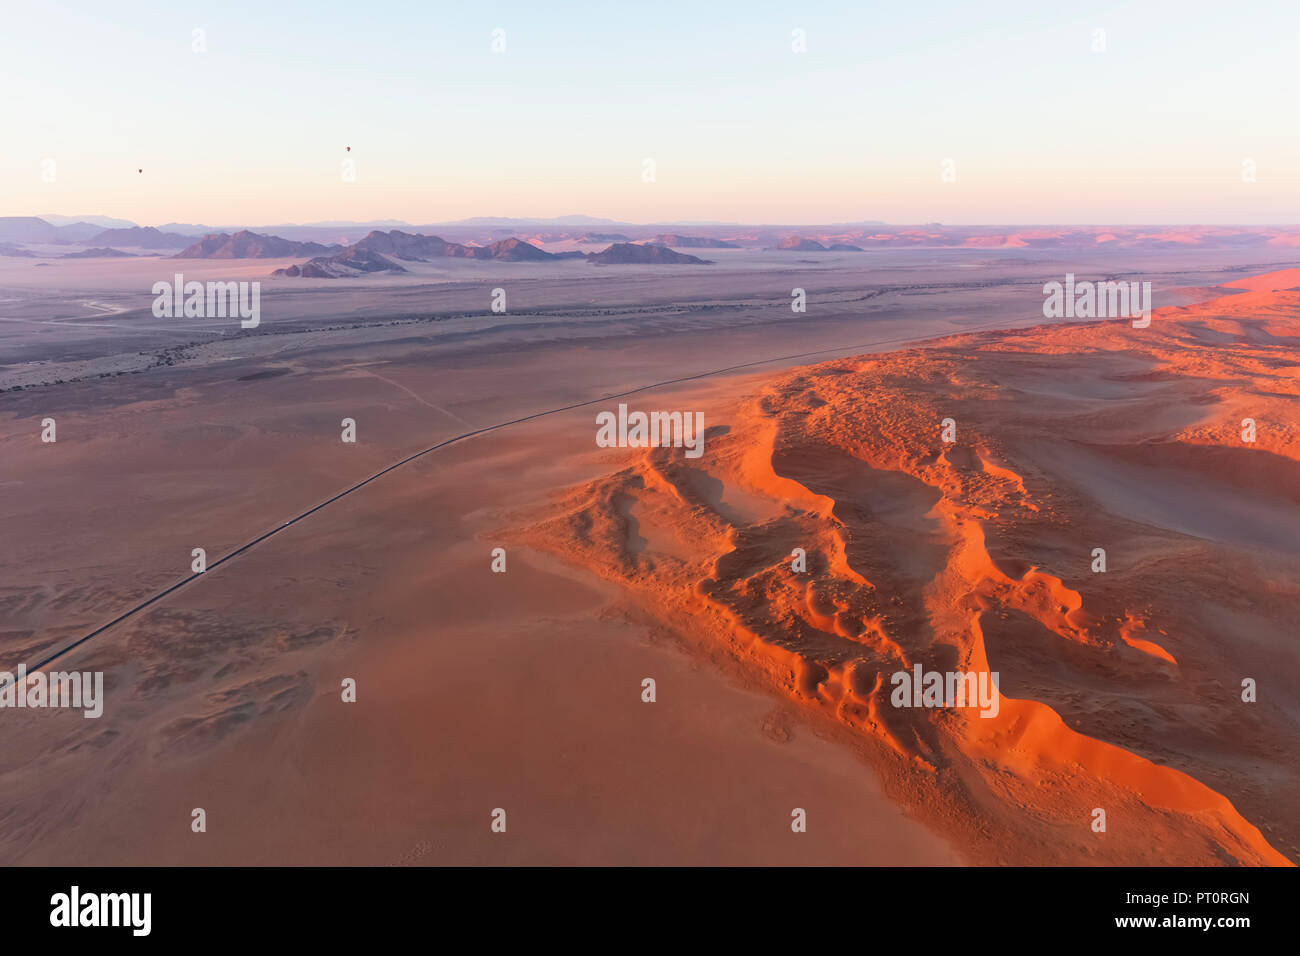 Afrika, Namibia, die Wüste Namib, Namib-Naukluft-Nationalpark, Luftaufnahme von Dünen der Wüste, Heißluftballons Stockfoto